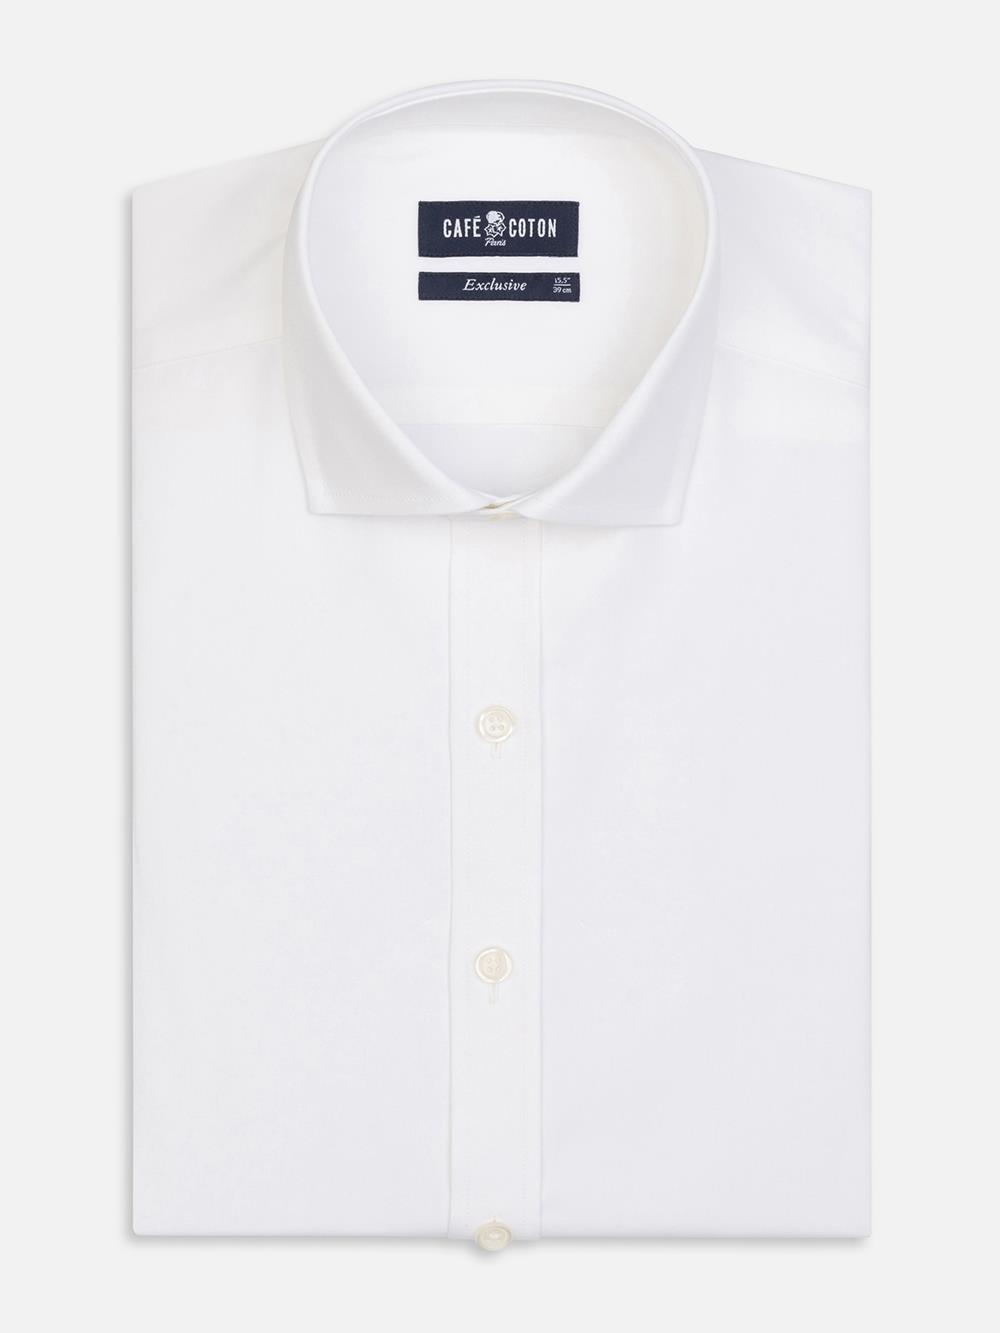 Ivory Pin Point slim fit shirt